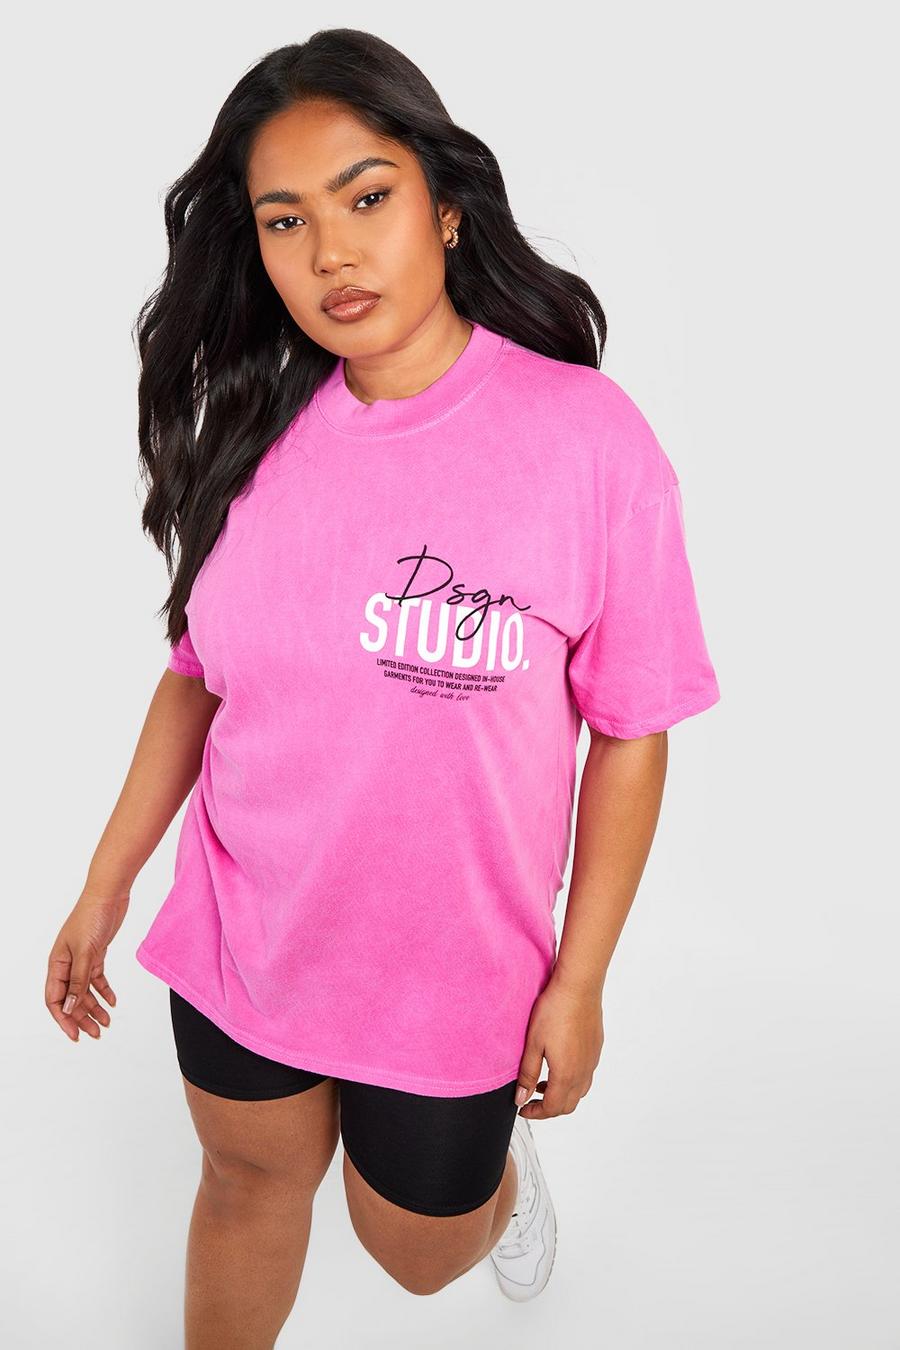 T-shirt Plus Size oversize con stampa Dsgn Studio ad altezza taschino, Hot pink rosa